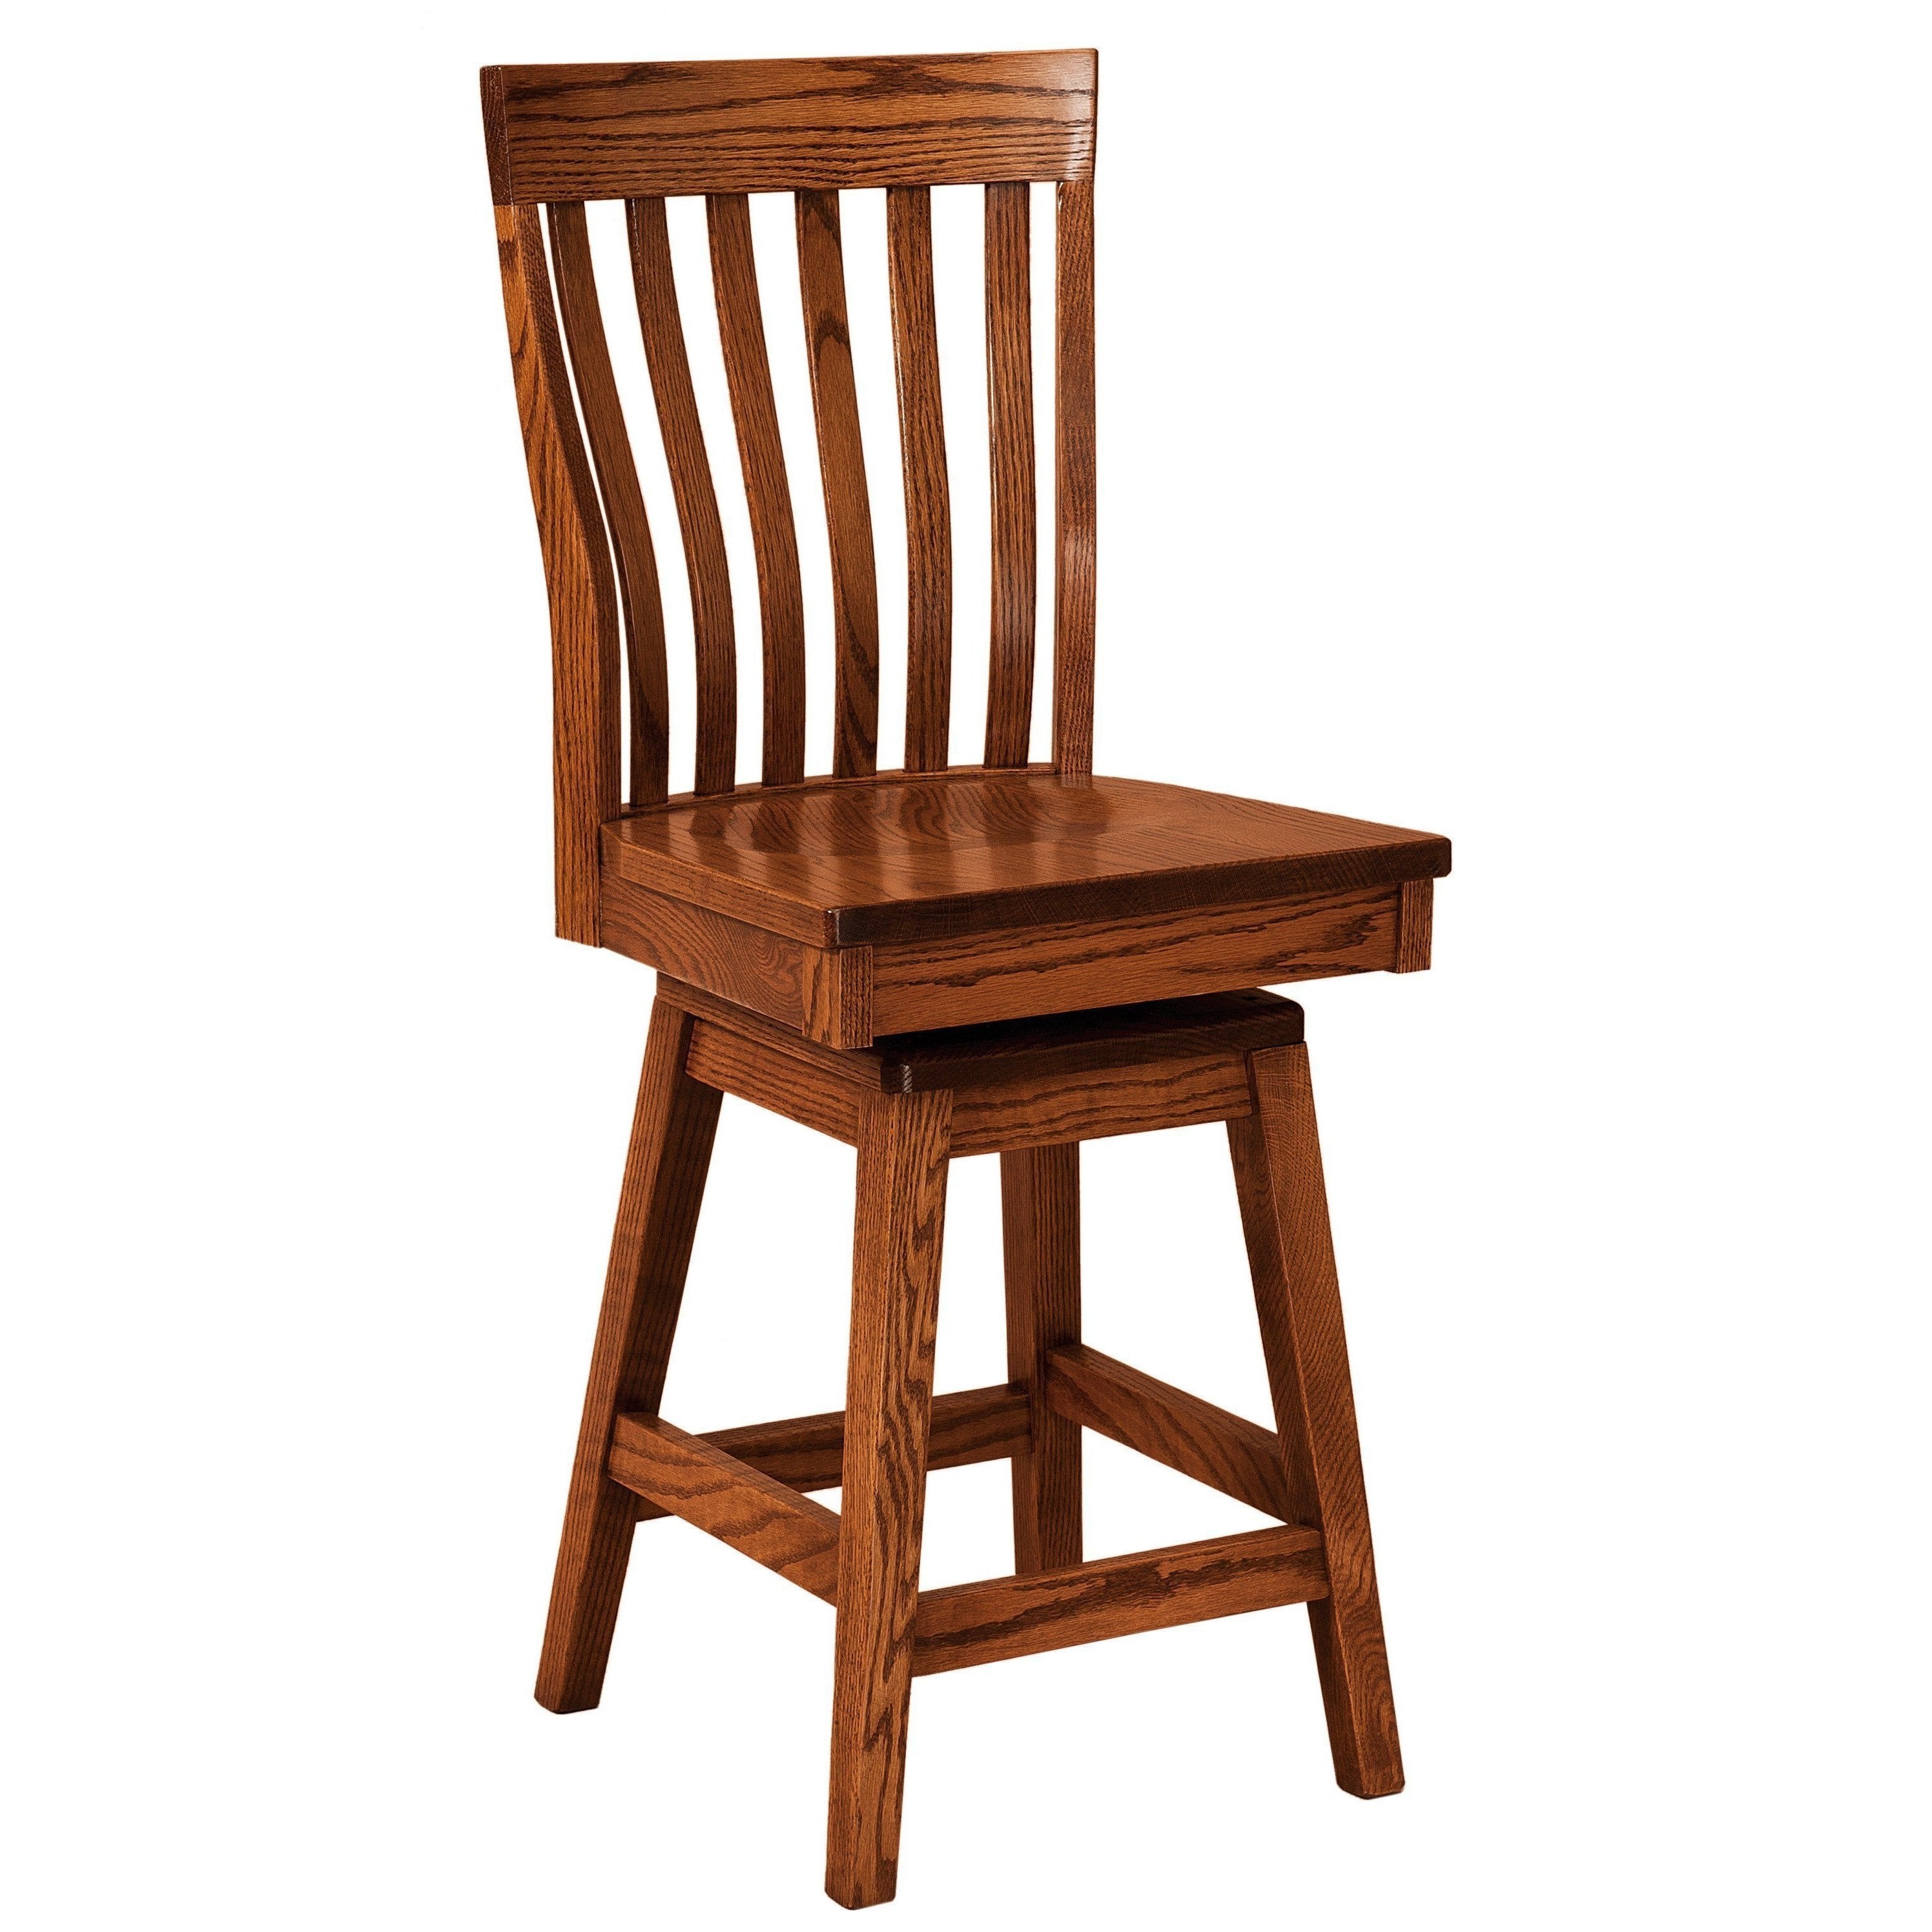 theodore-swivel-bar-chair-260325.jpg